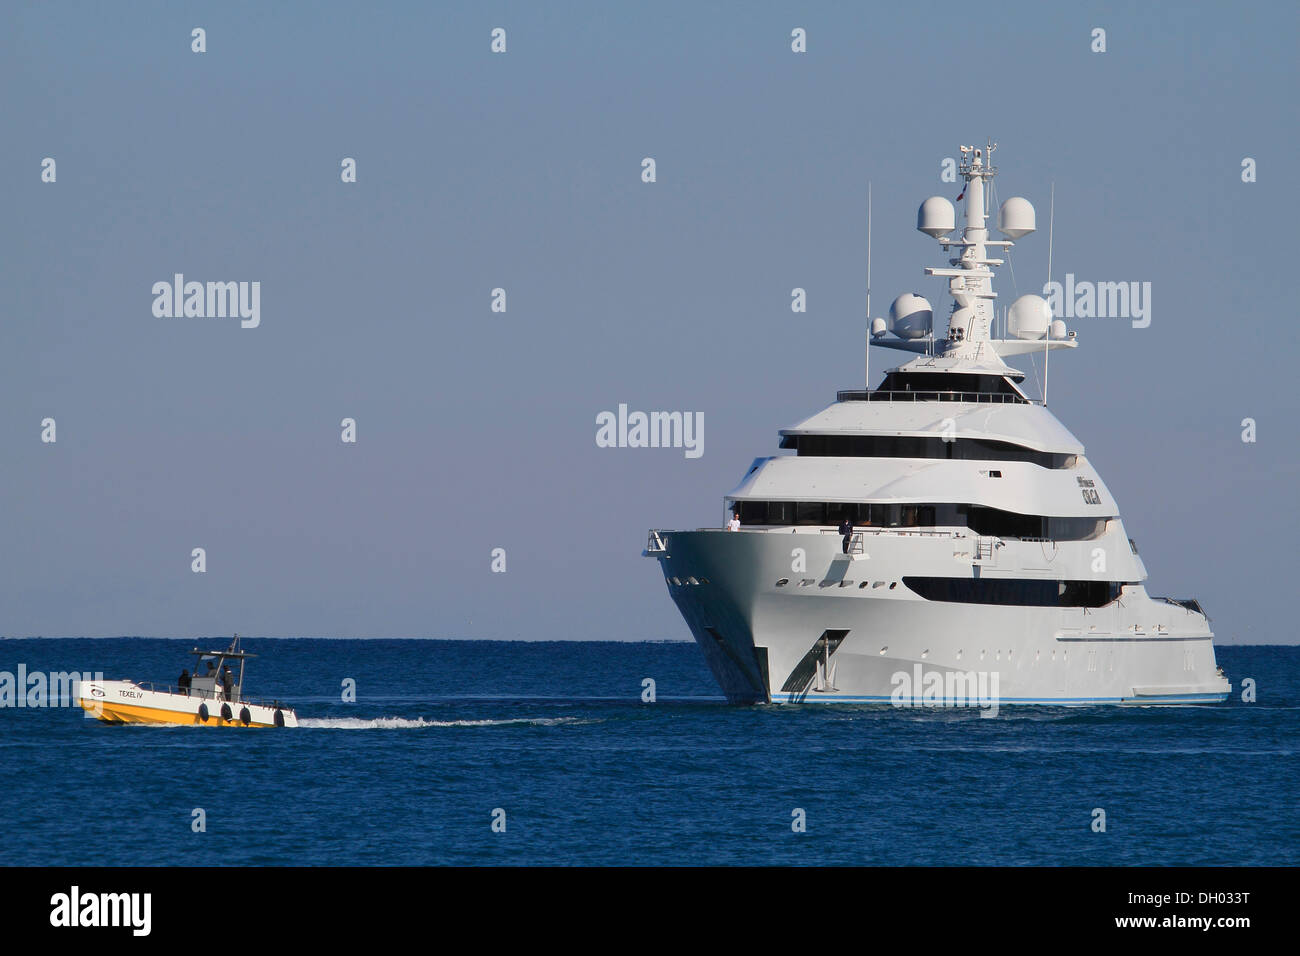 Motoryacht 'St. Princess Olga', Oceanco shipyard, length 85.5 metres, built in 2013, arriving in Antibes on its maiden voyage, Stock Photo